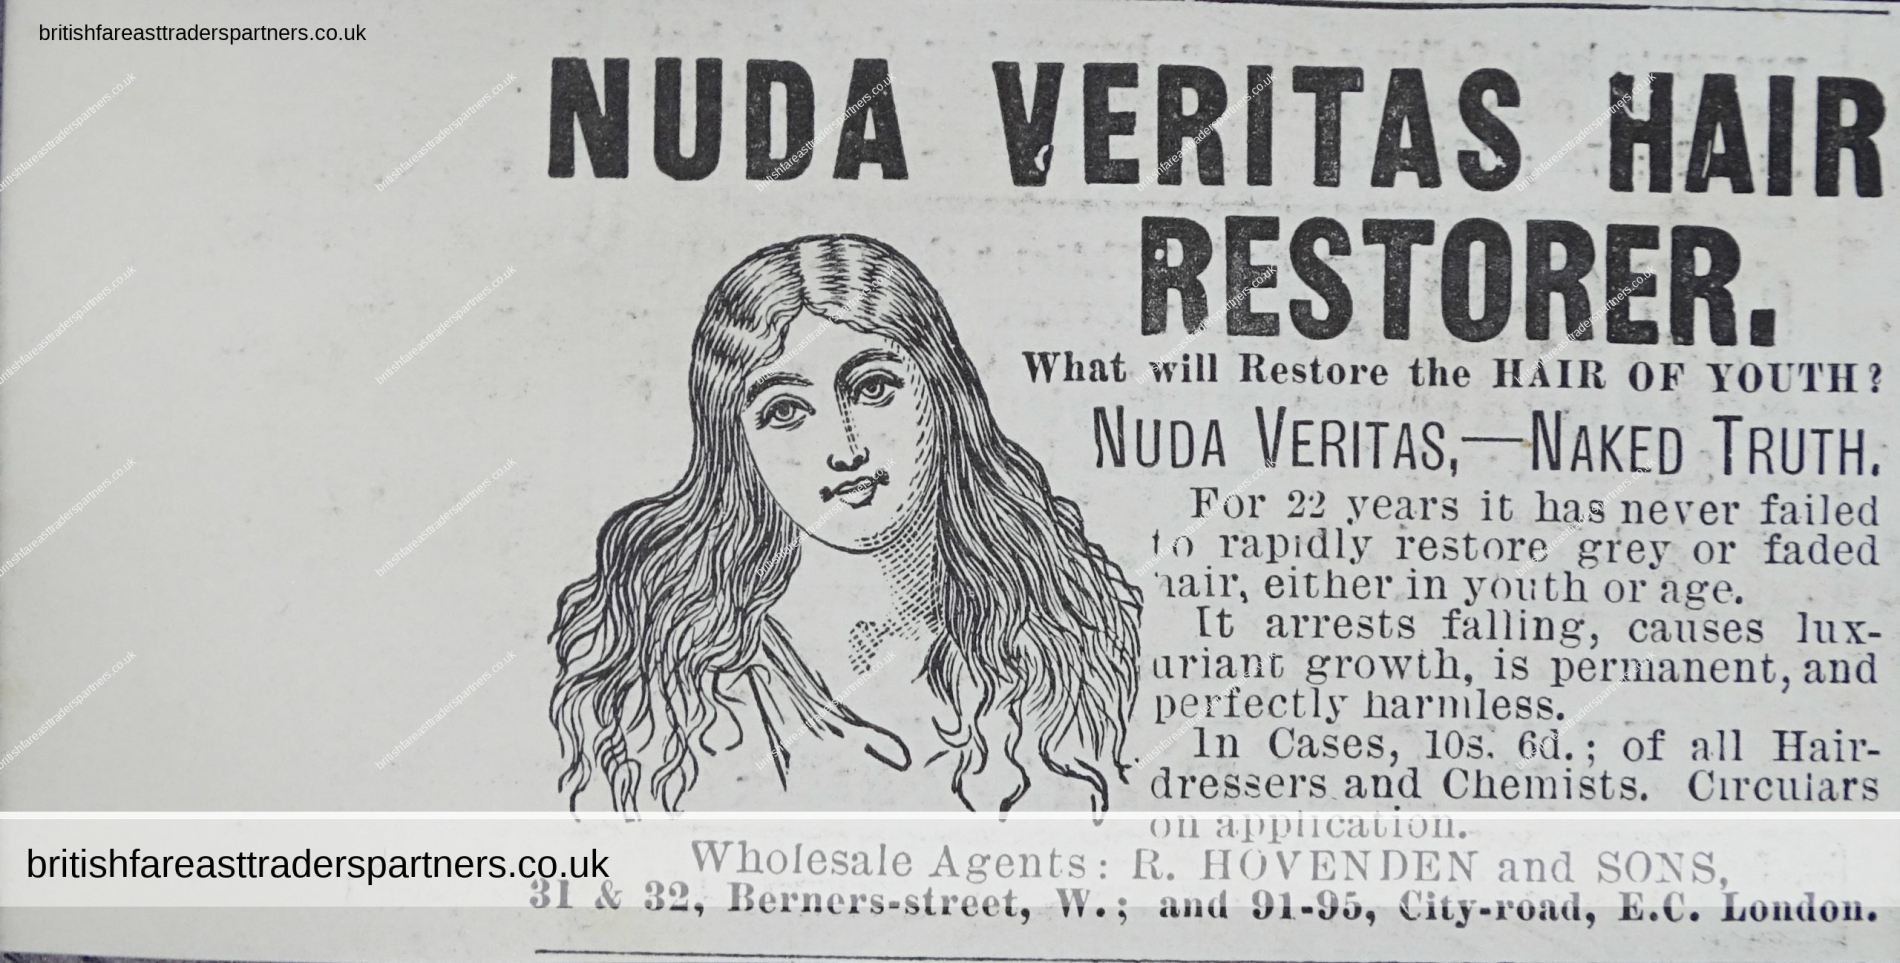 ANTIQUE 15th JUNE 1889 NUDA VERITAS Hair Restorer Wholesale Agents: R. HOVENDEN & SONS VICTORIAN LONDON Illustrated London News ADVERTISEMENT COLLECTIBLES VICTORIANA EPHEMERA